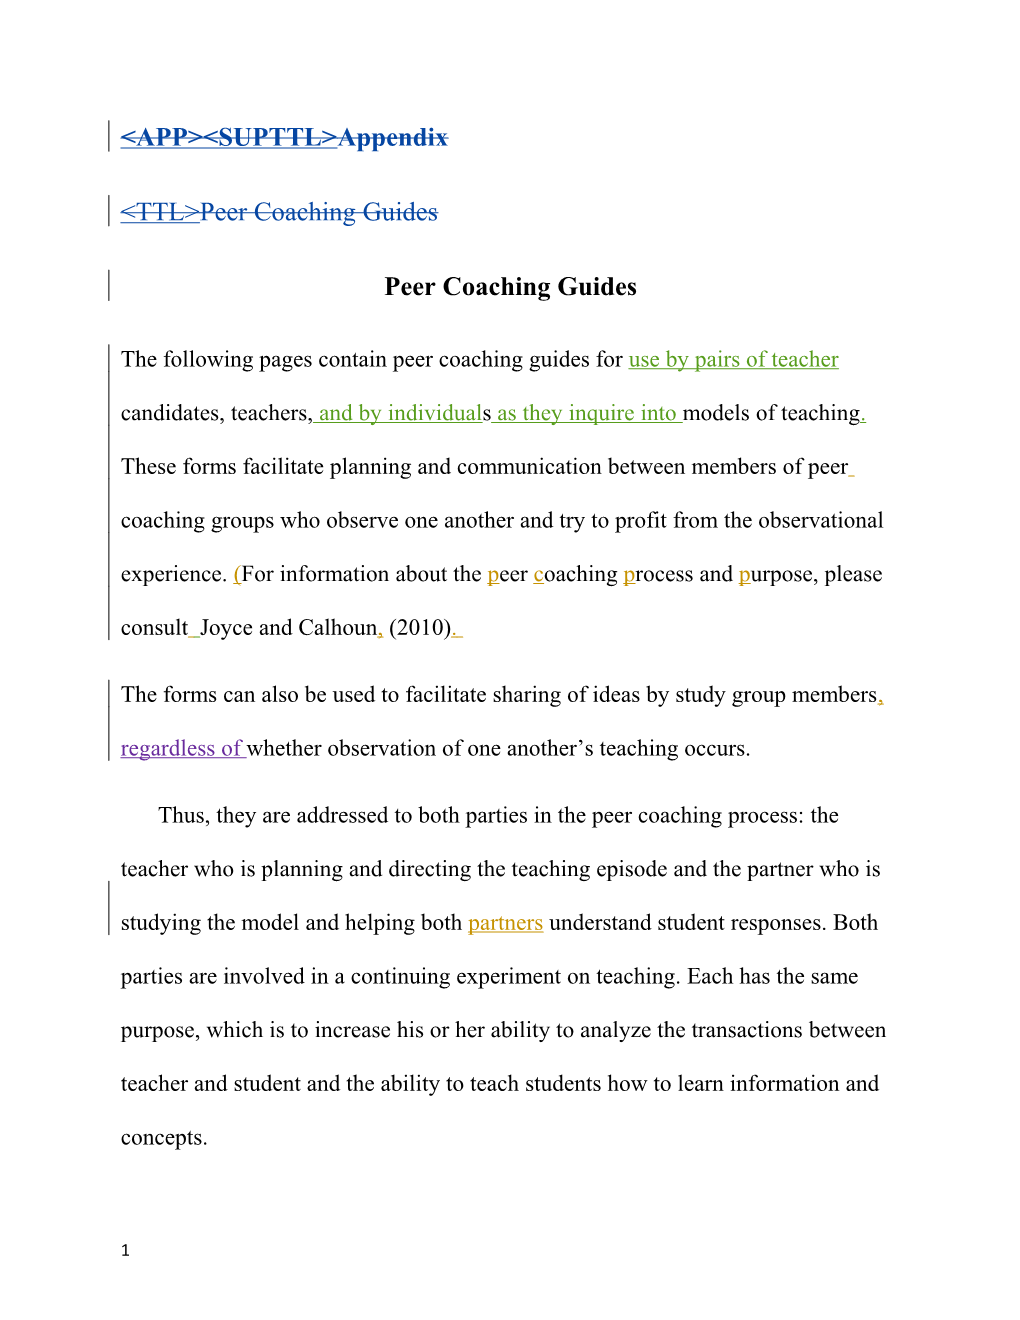 &lt;TTL&gt;Peer Coaching Guides